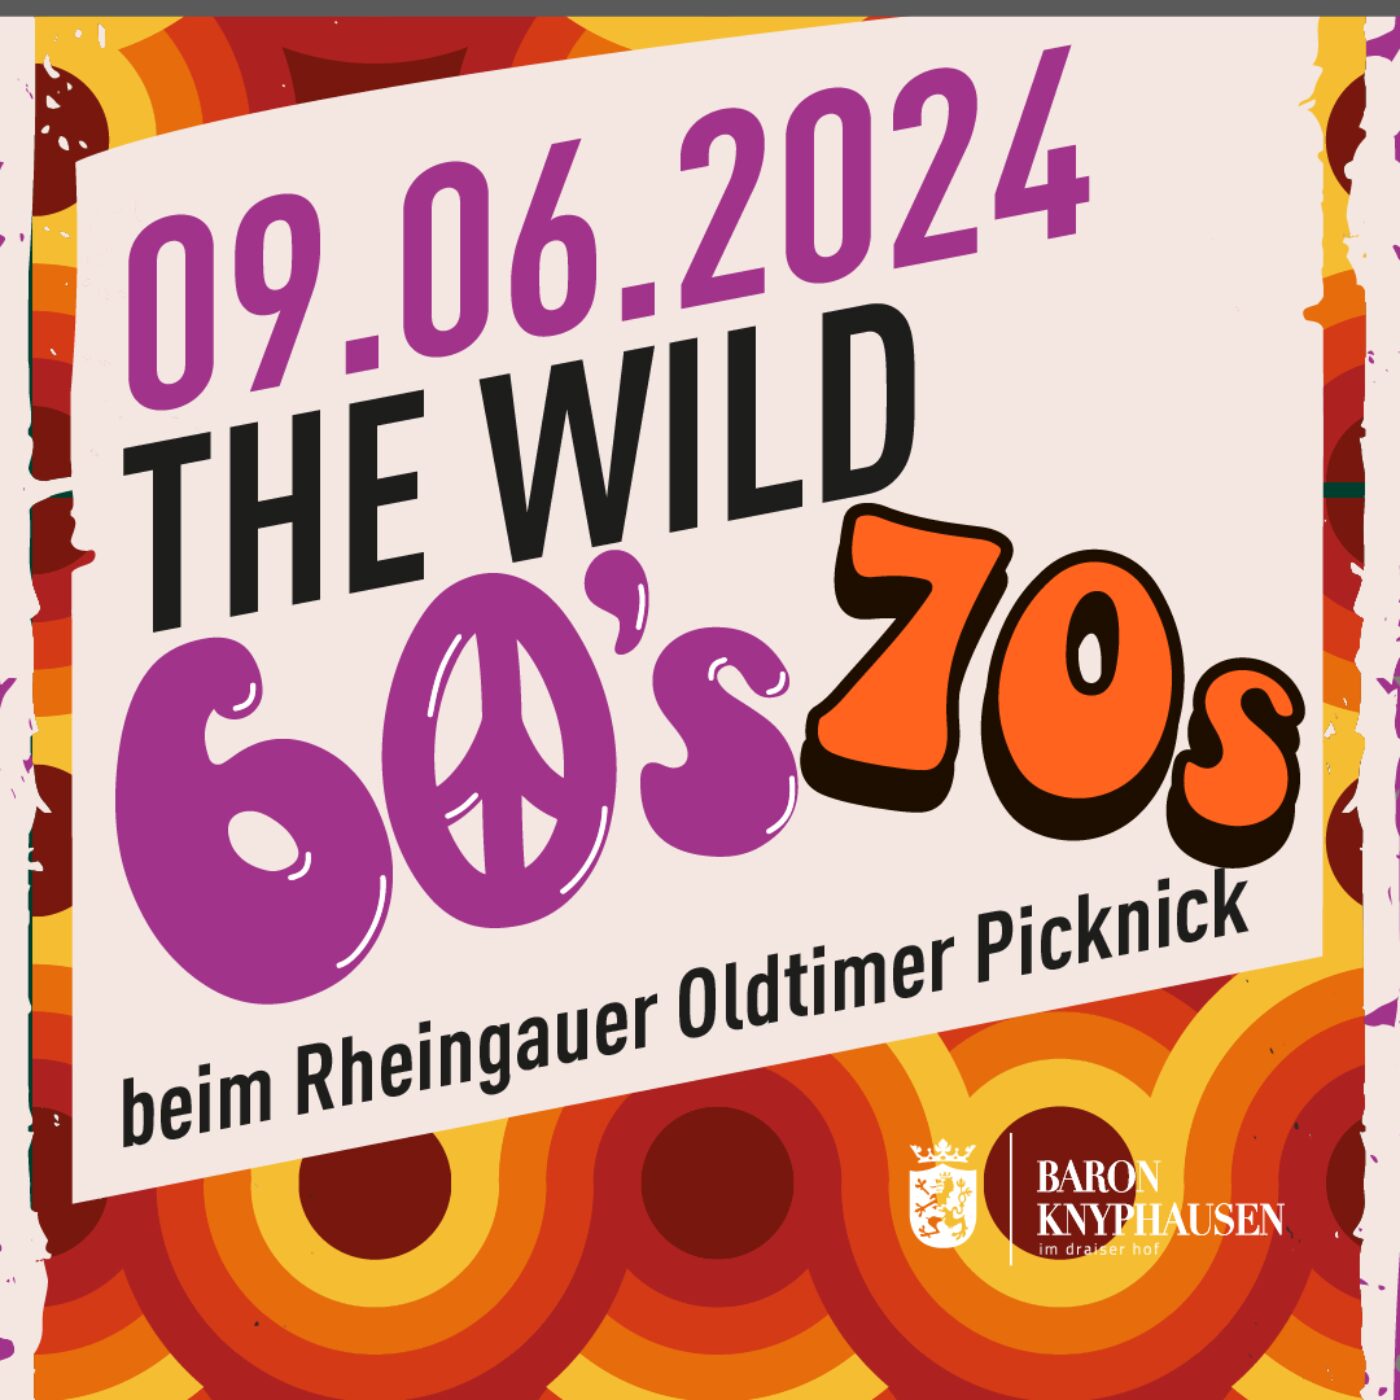 ROP - The Wild 60s & 70s"